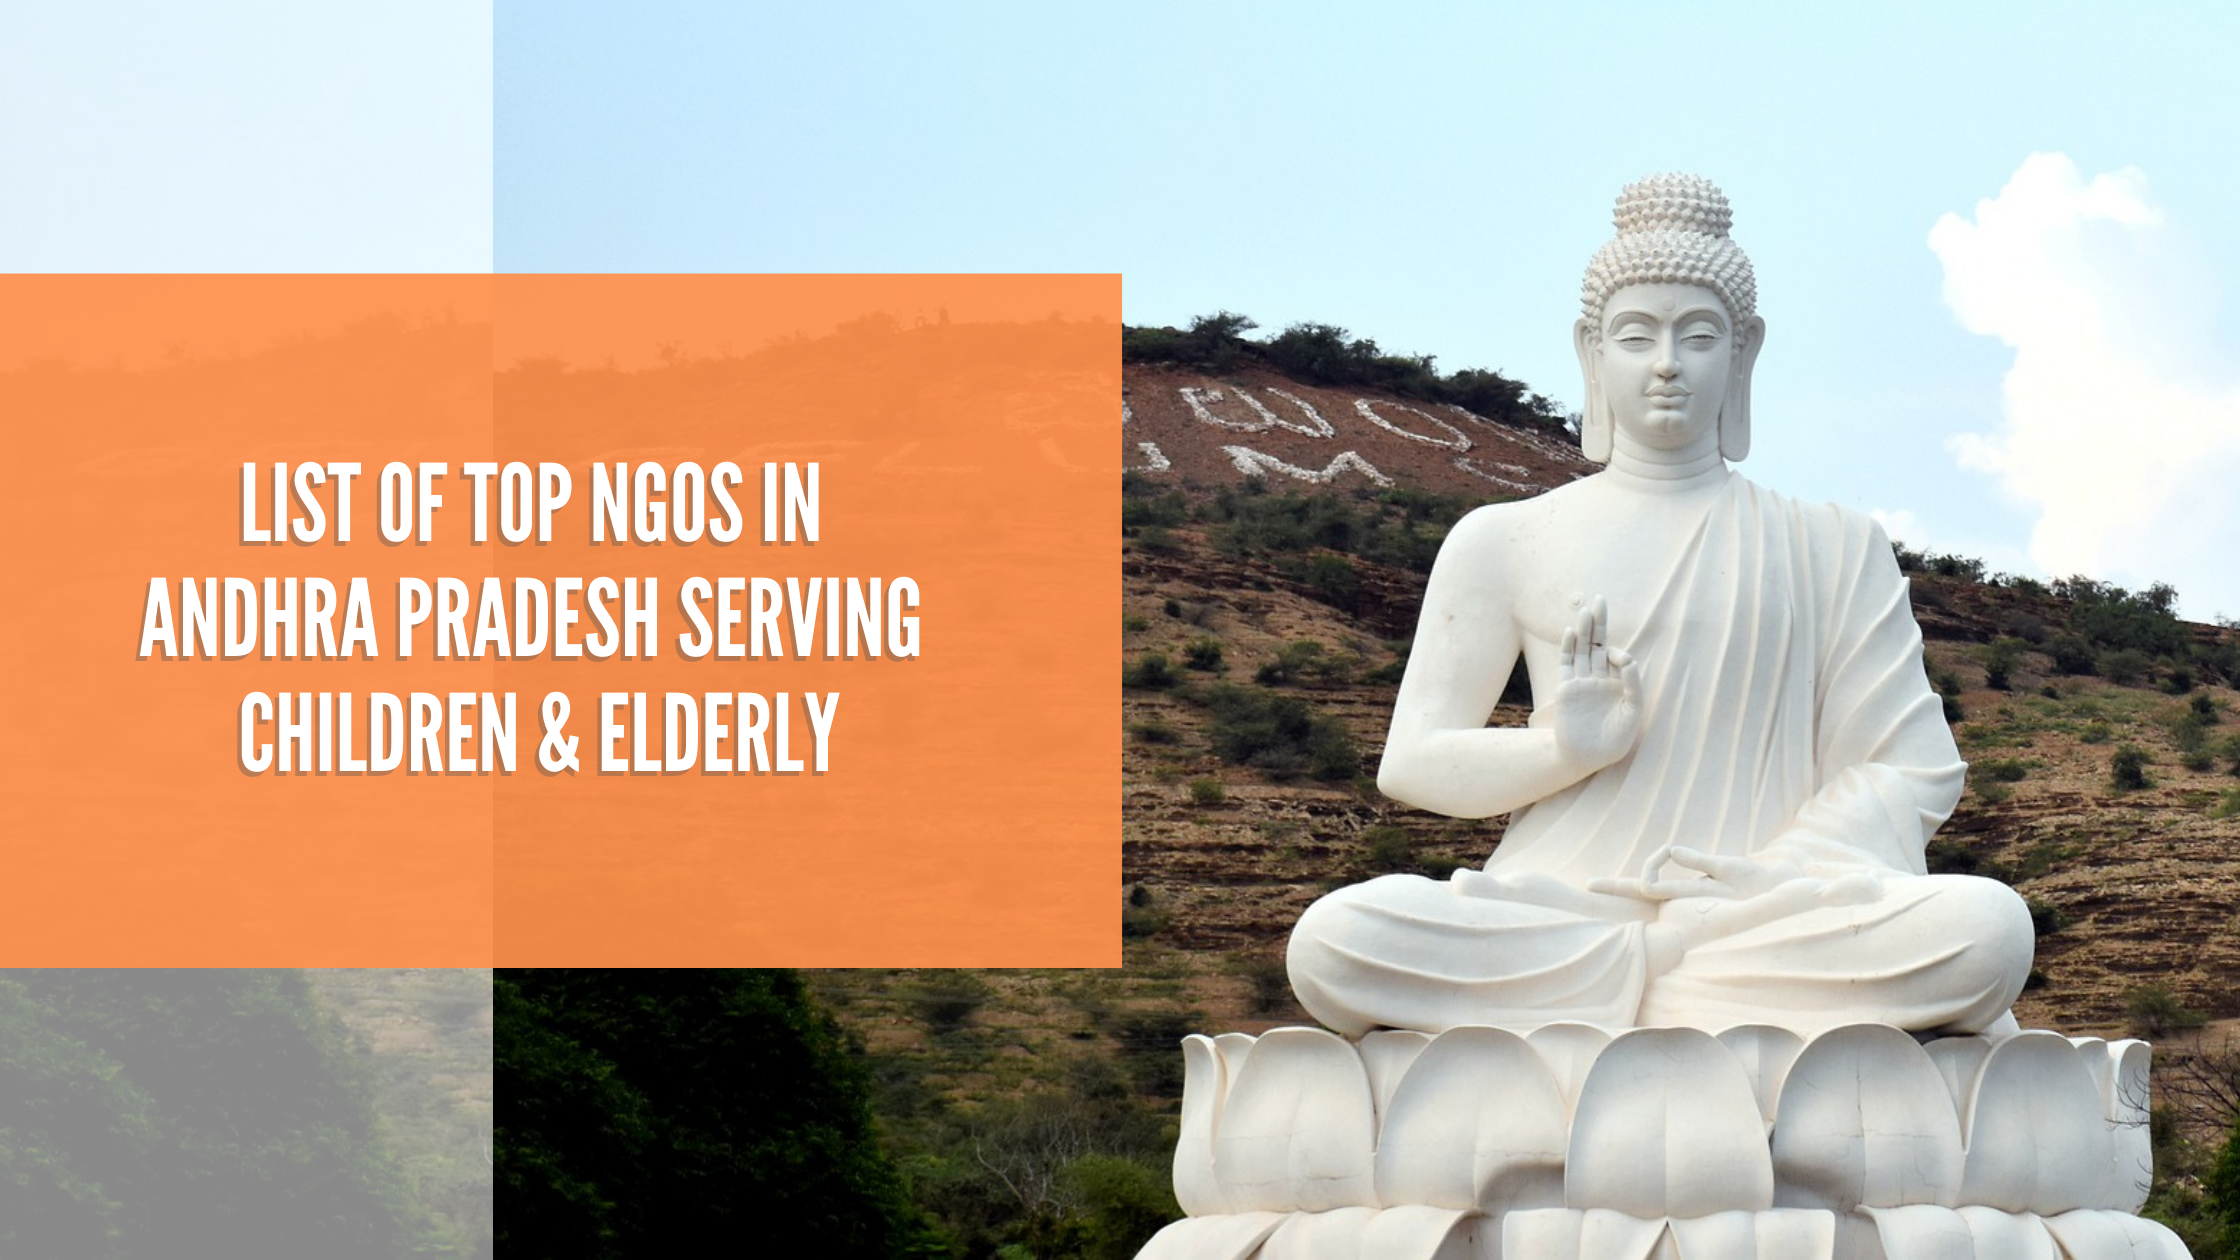 List of Top NGOs in Andhra Pradesh serving Children & Elderly